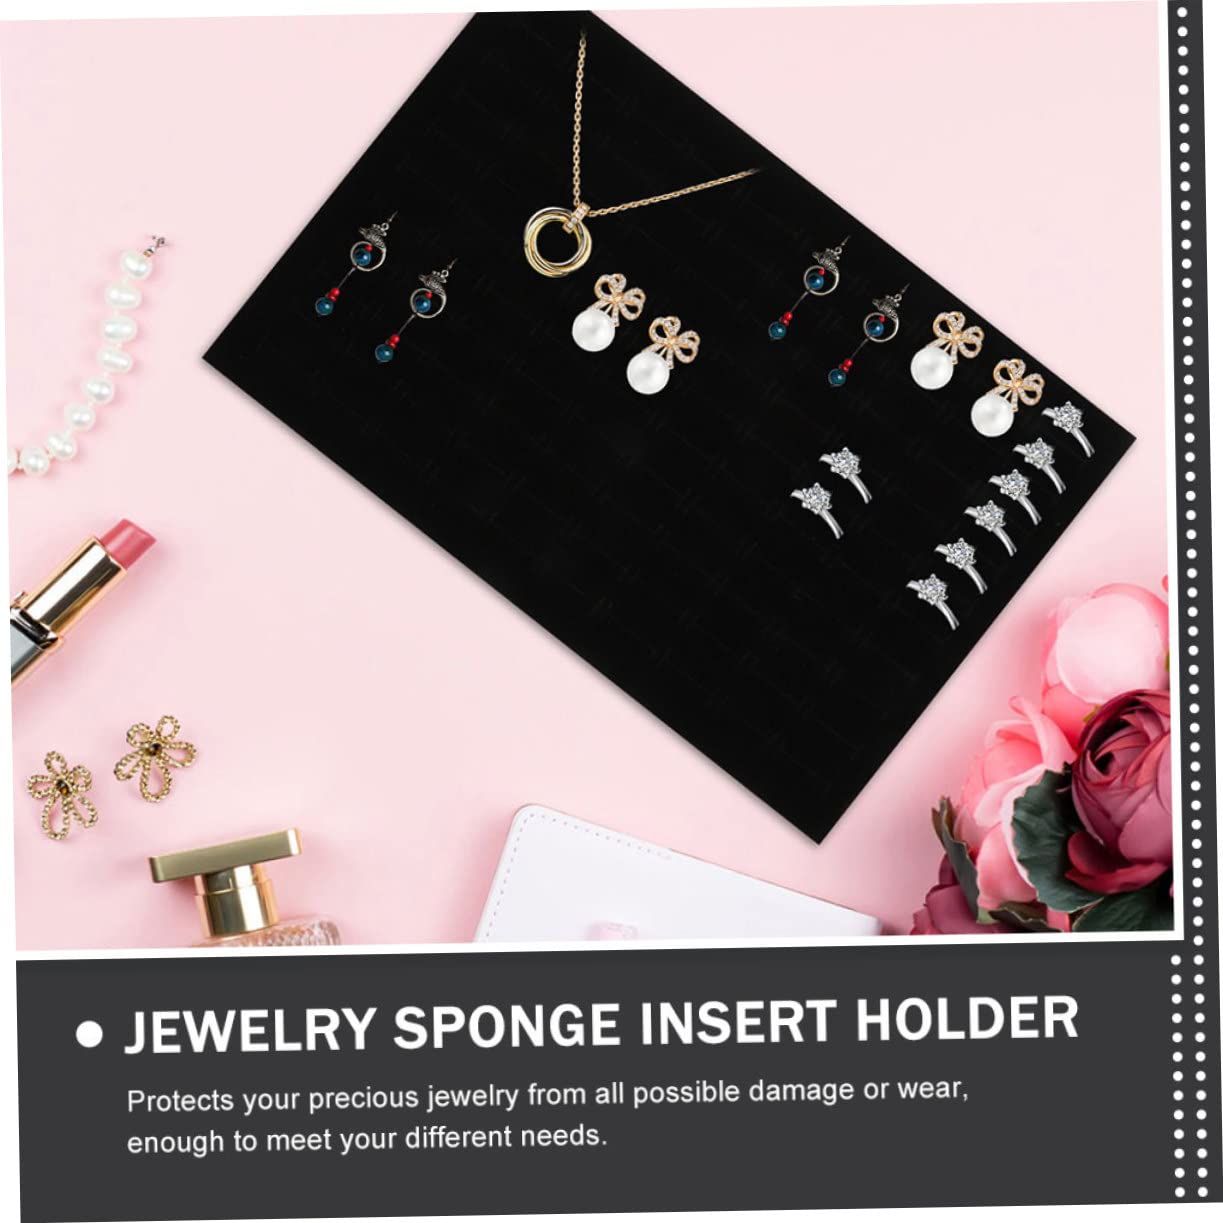 Holibanna 2pcs Box Jewelry Sponge Pad Jewelry Trays Earring Sponge Tray Ring Earring Display Pad Jewelry Insert Mat Black Necklaces Sponge Earring Display Holder Props Accessories